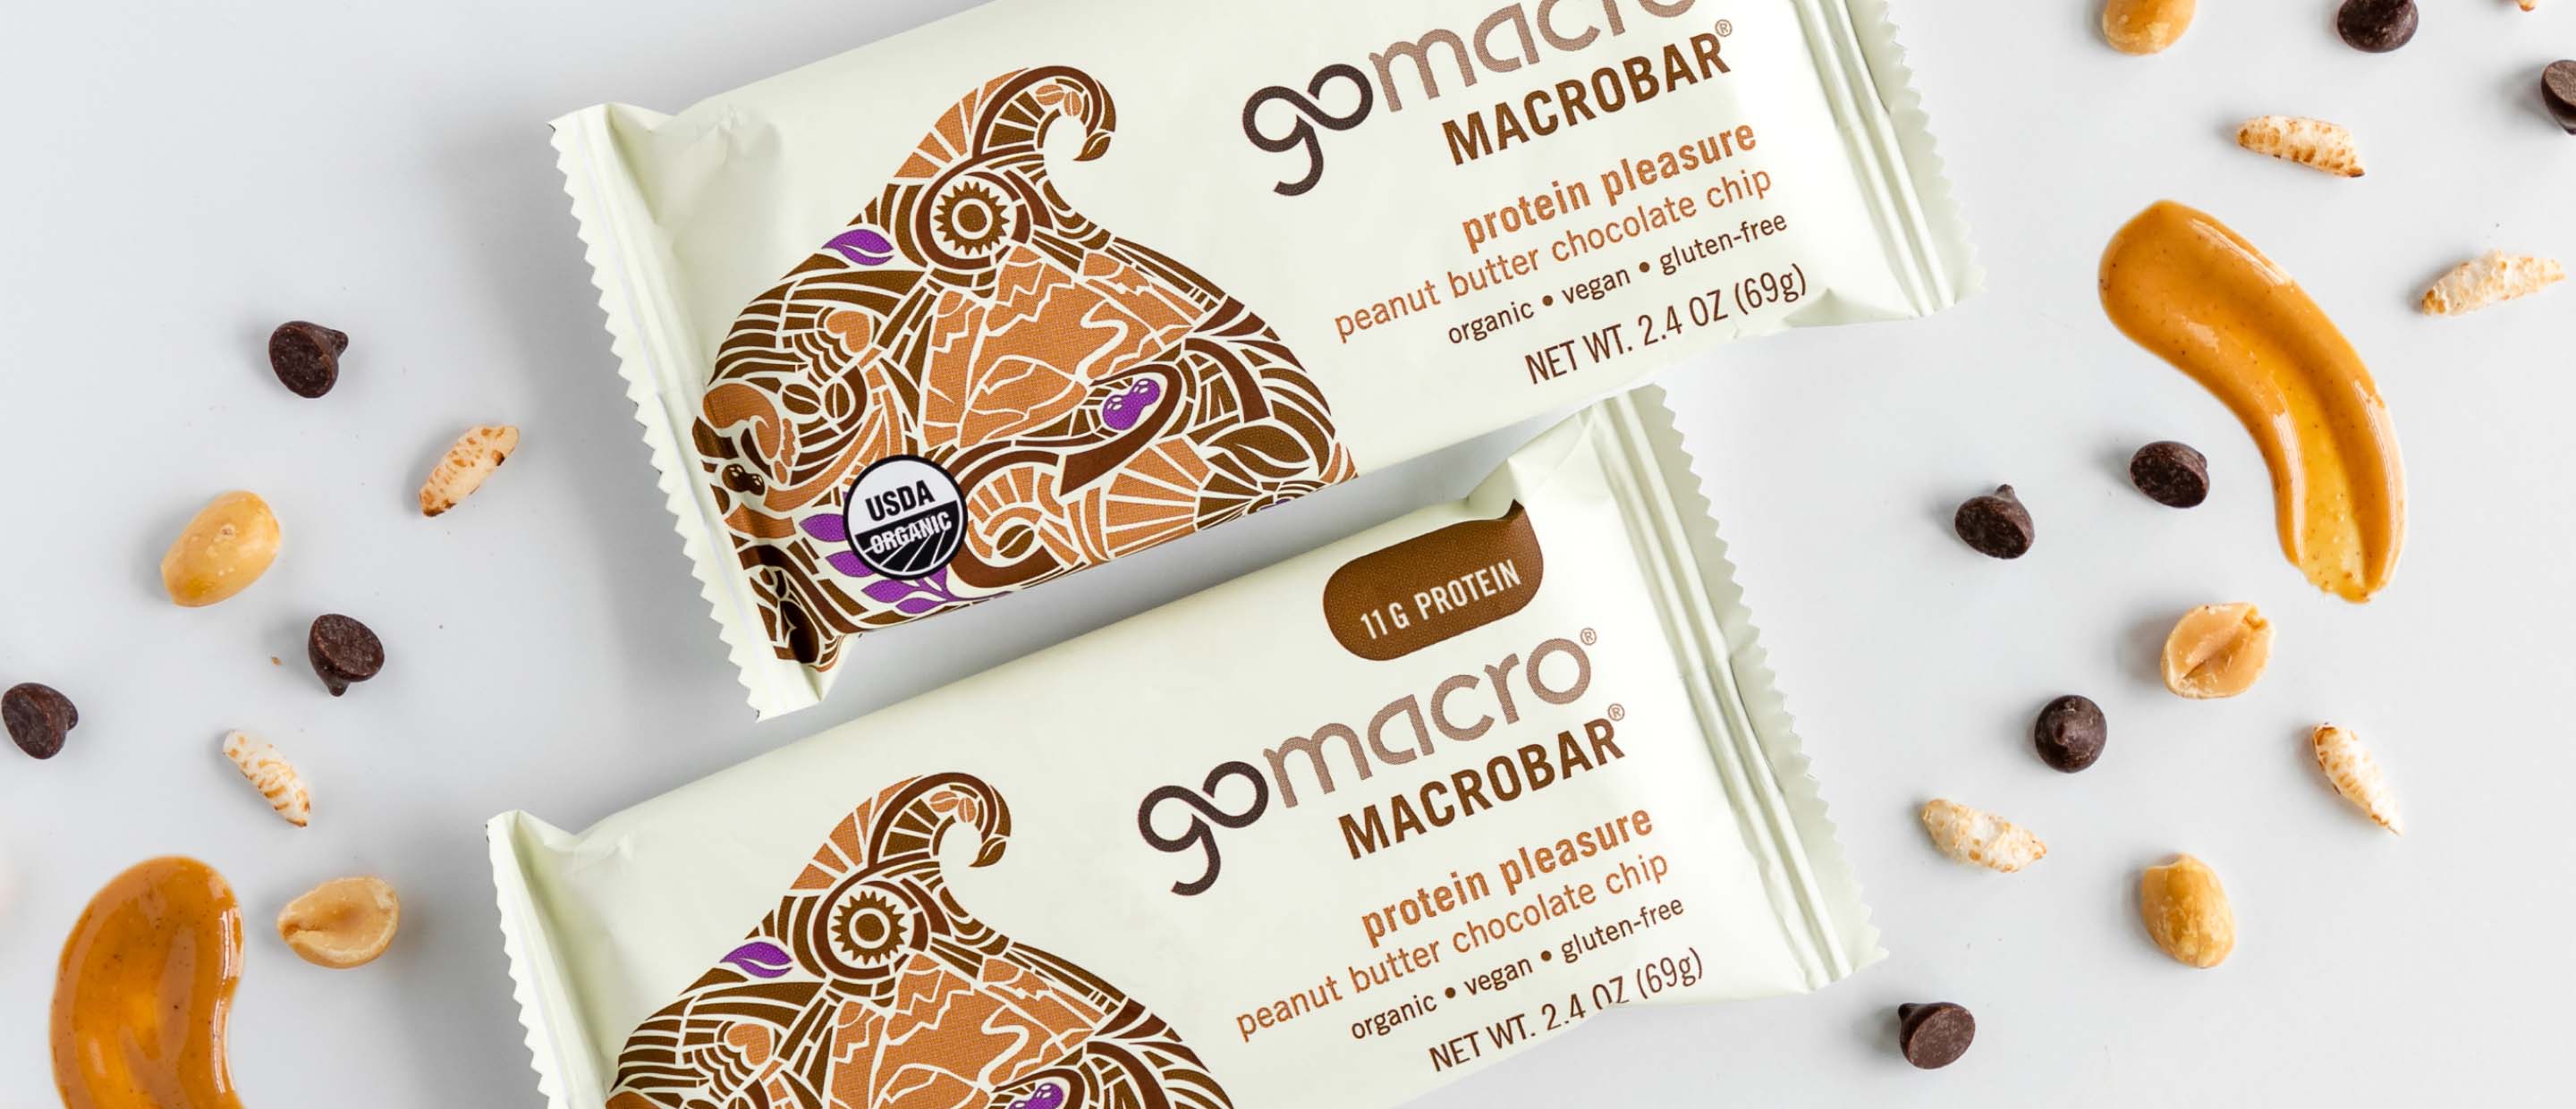 Two GoMacro Protein Pleasure bars